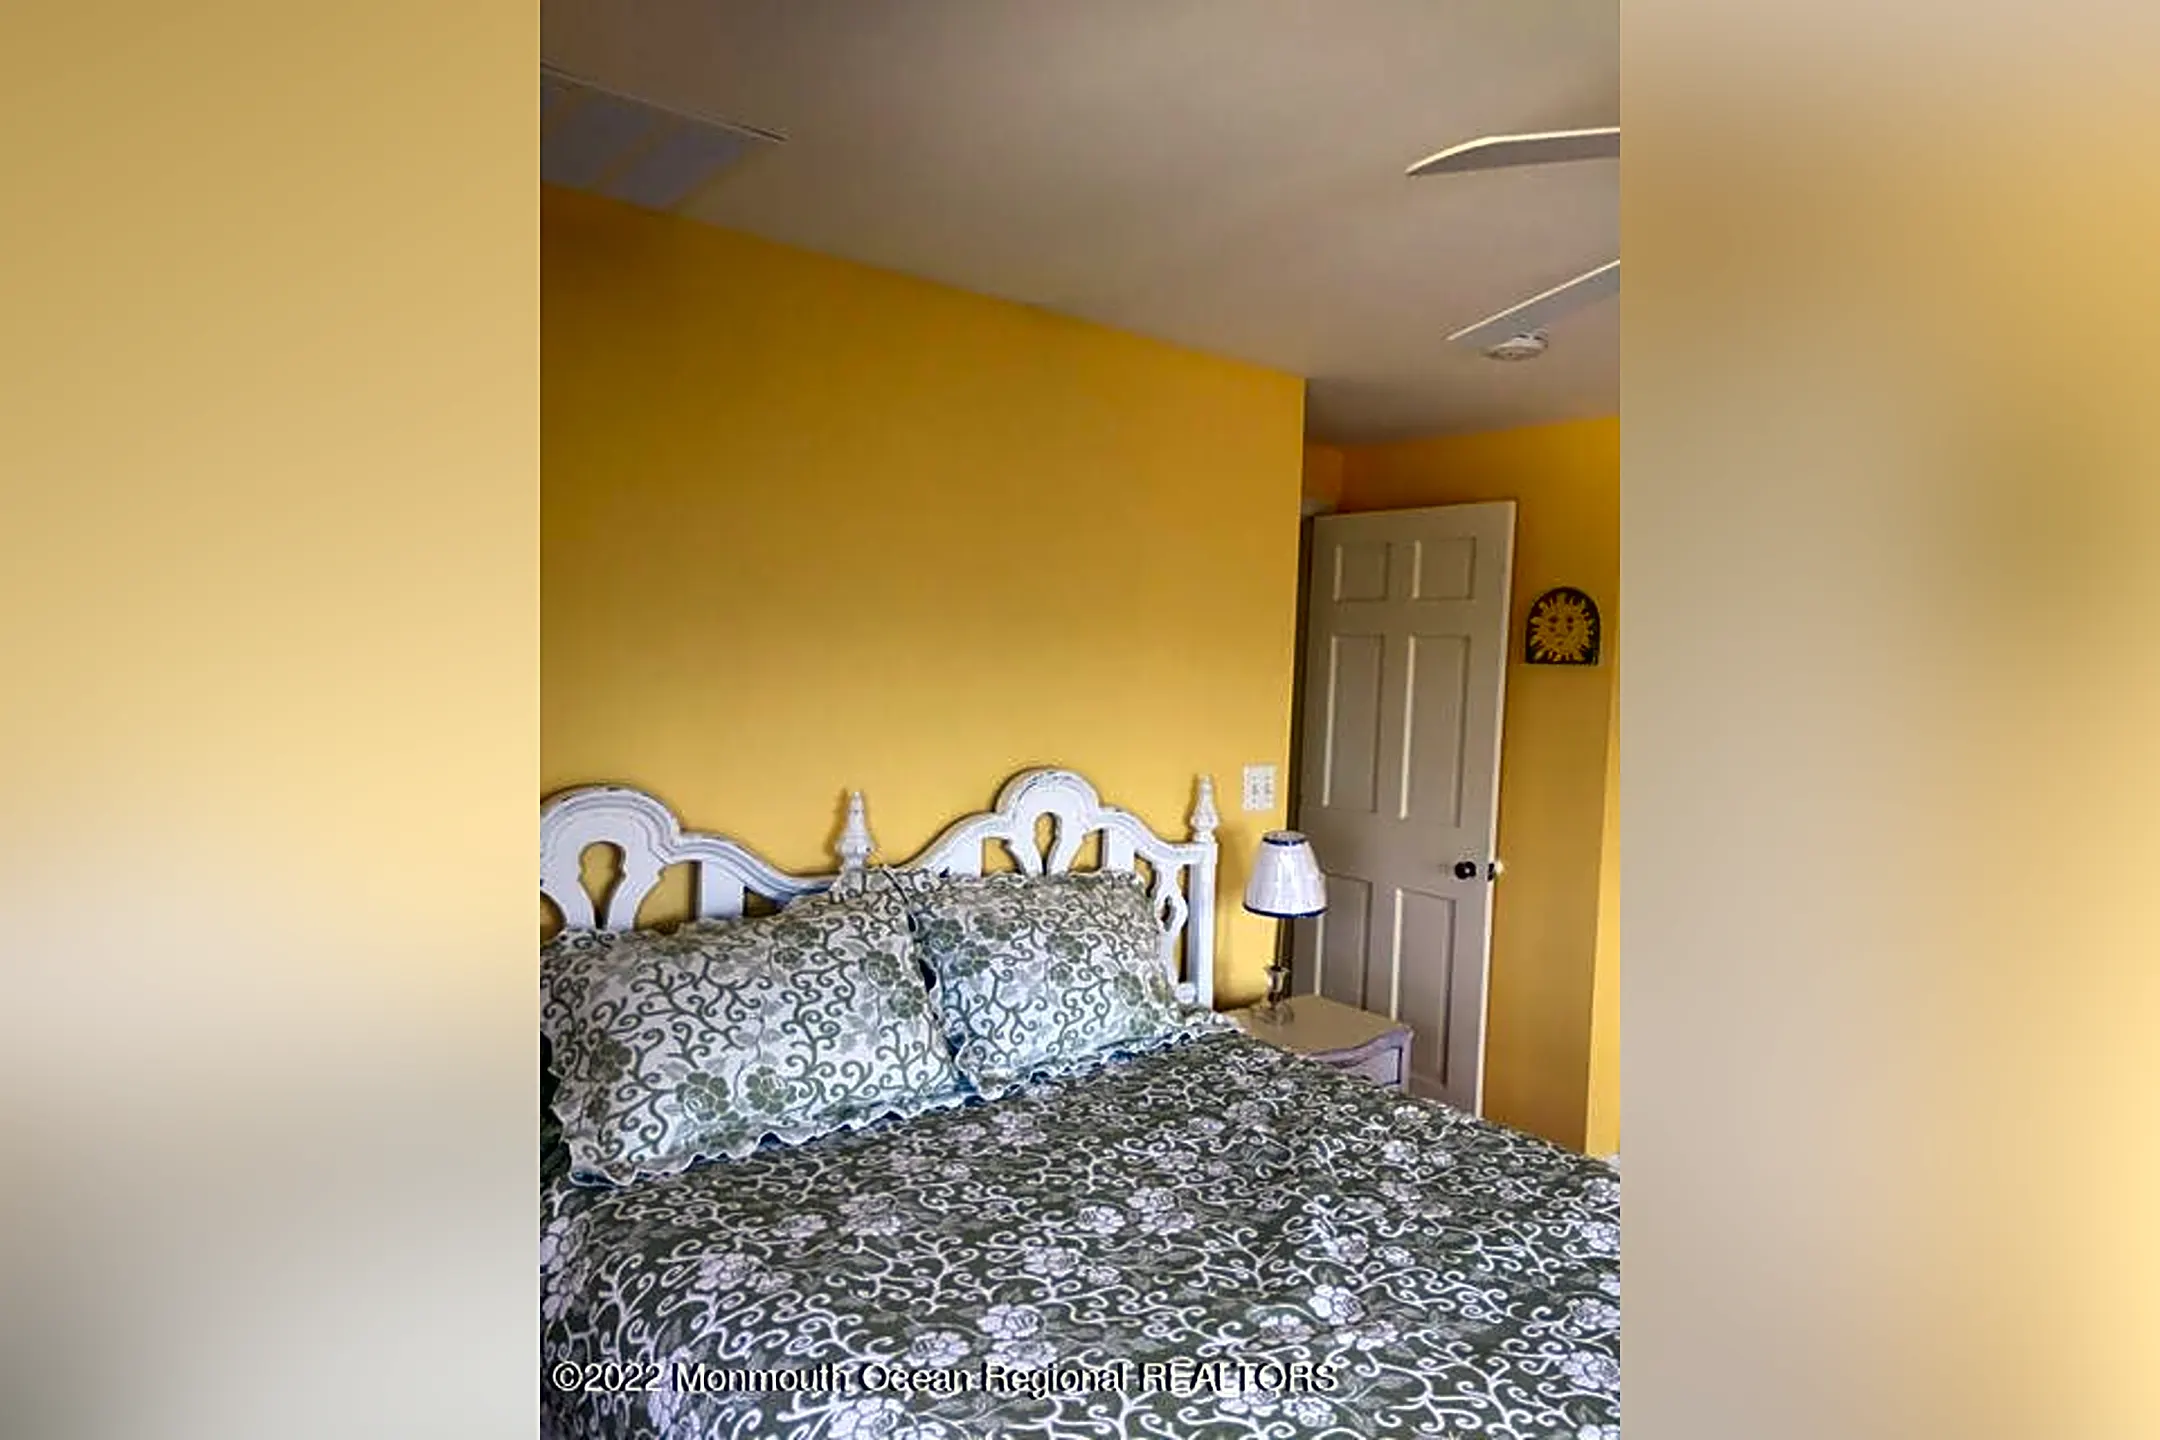 Bedroom - 111 Pershing Blvd - Lavallette, NJ